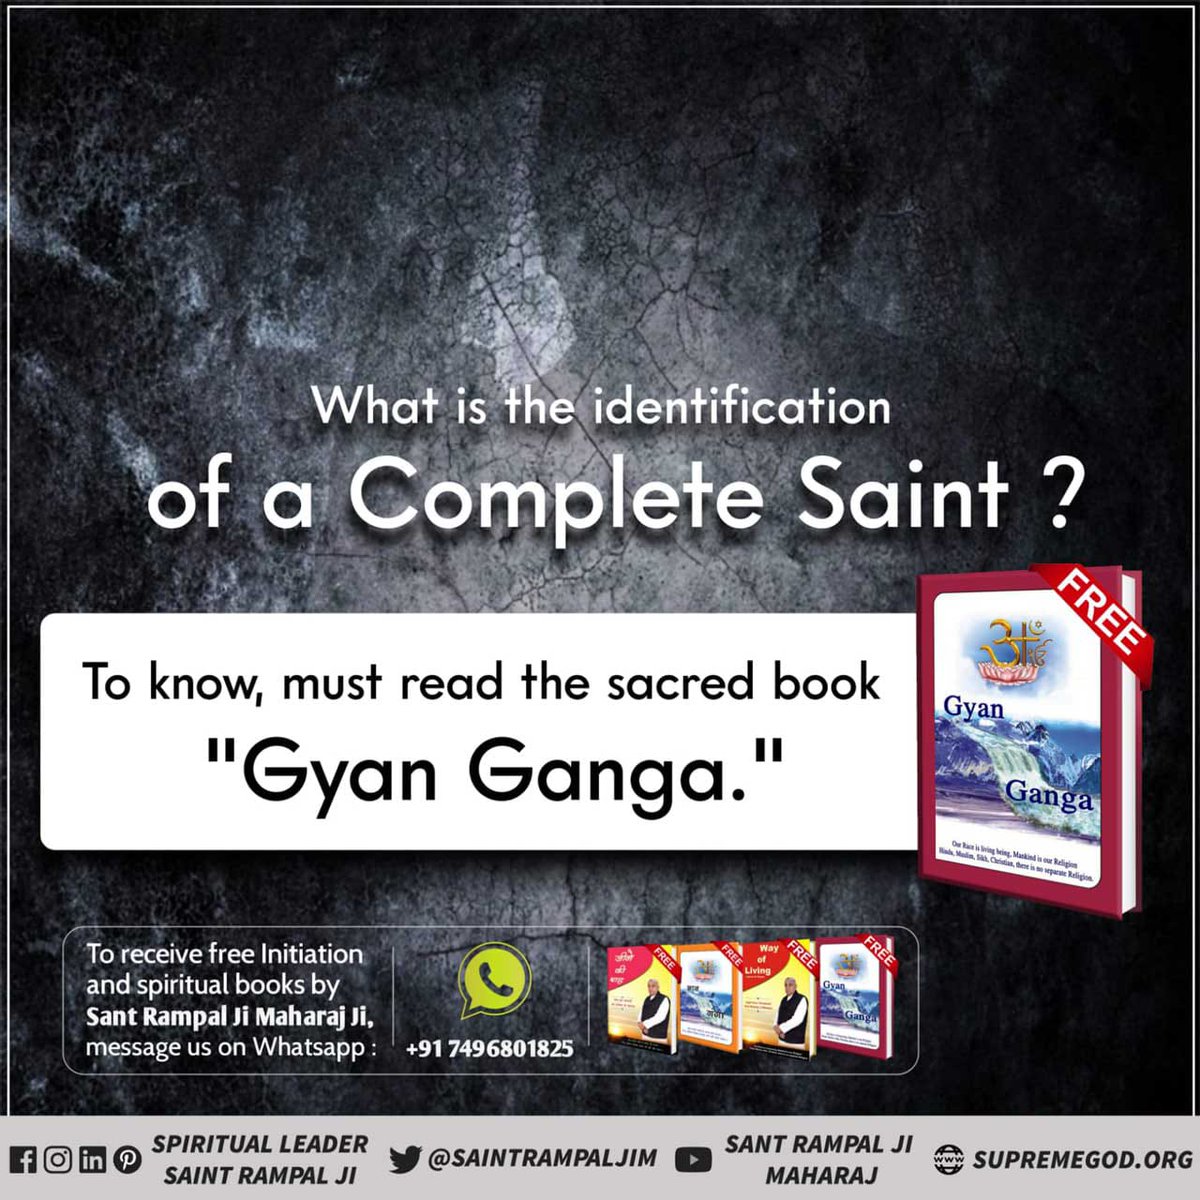 #GyanGanga #viral #hindiquotes
#SantRampalJiMaharaj
#SaintRampalJiQuotes
#TrueGuru
#TatvdarshiSant